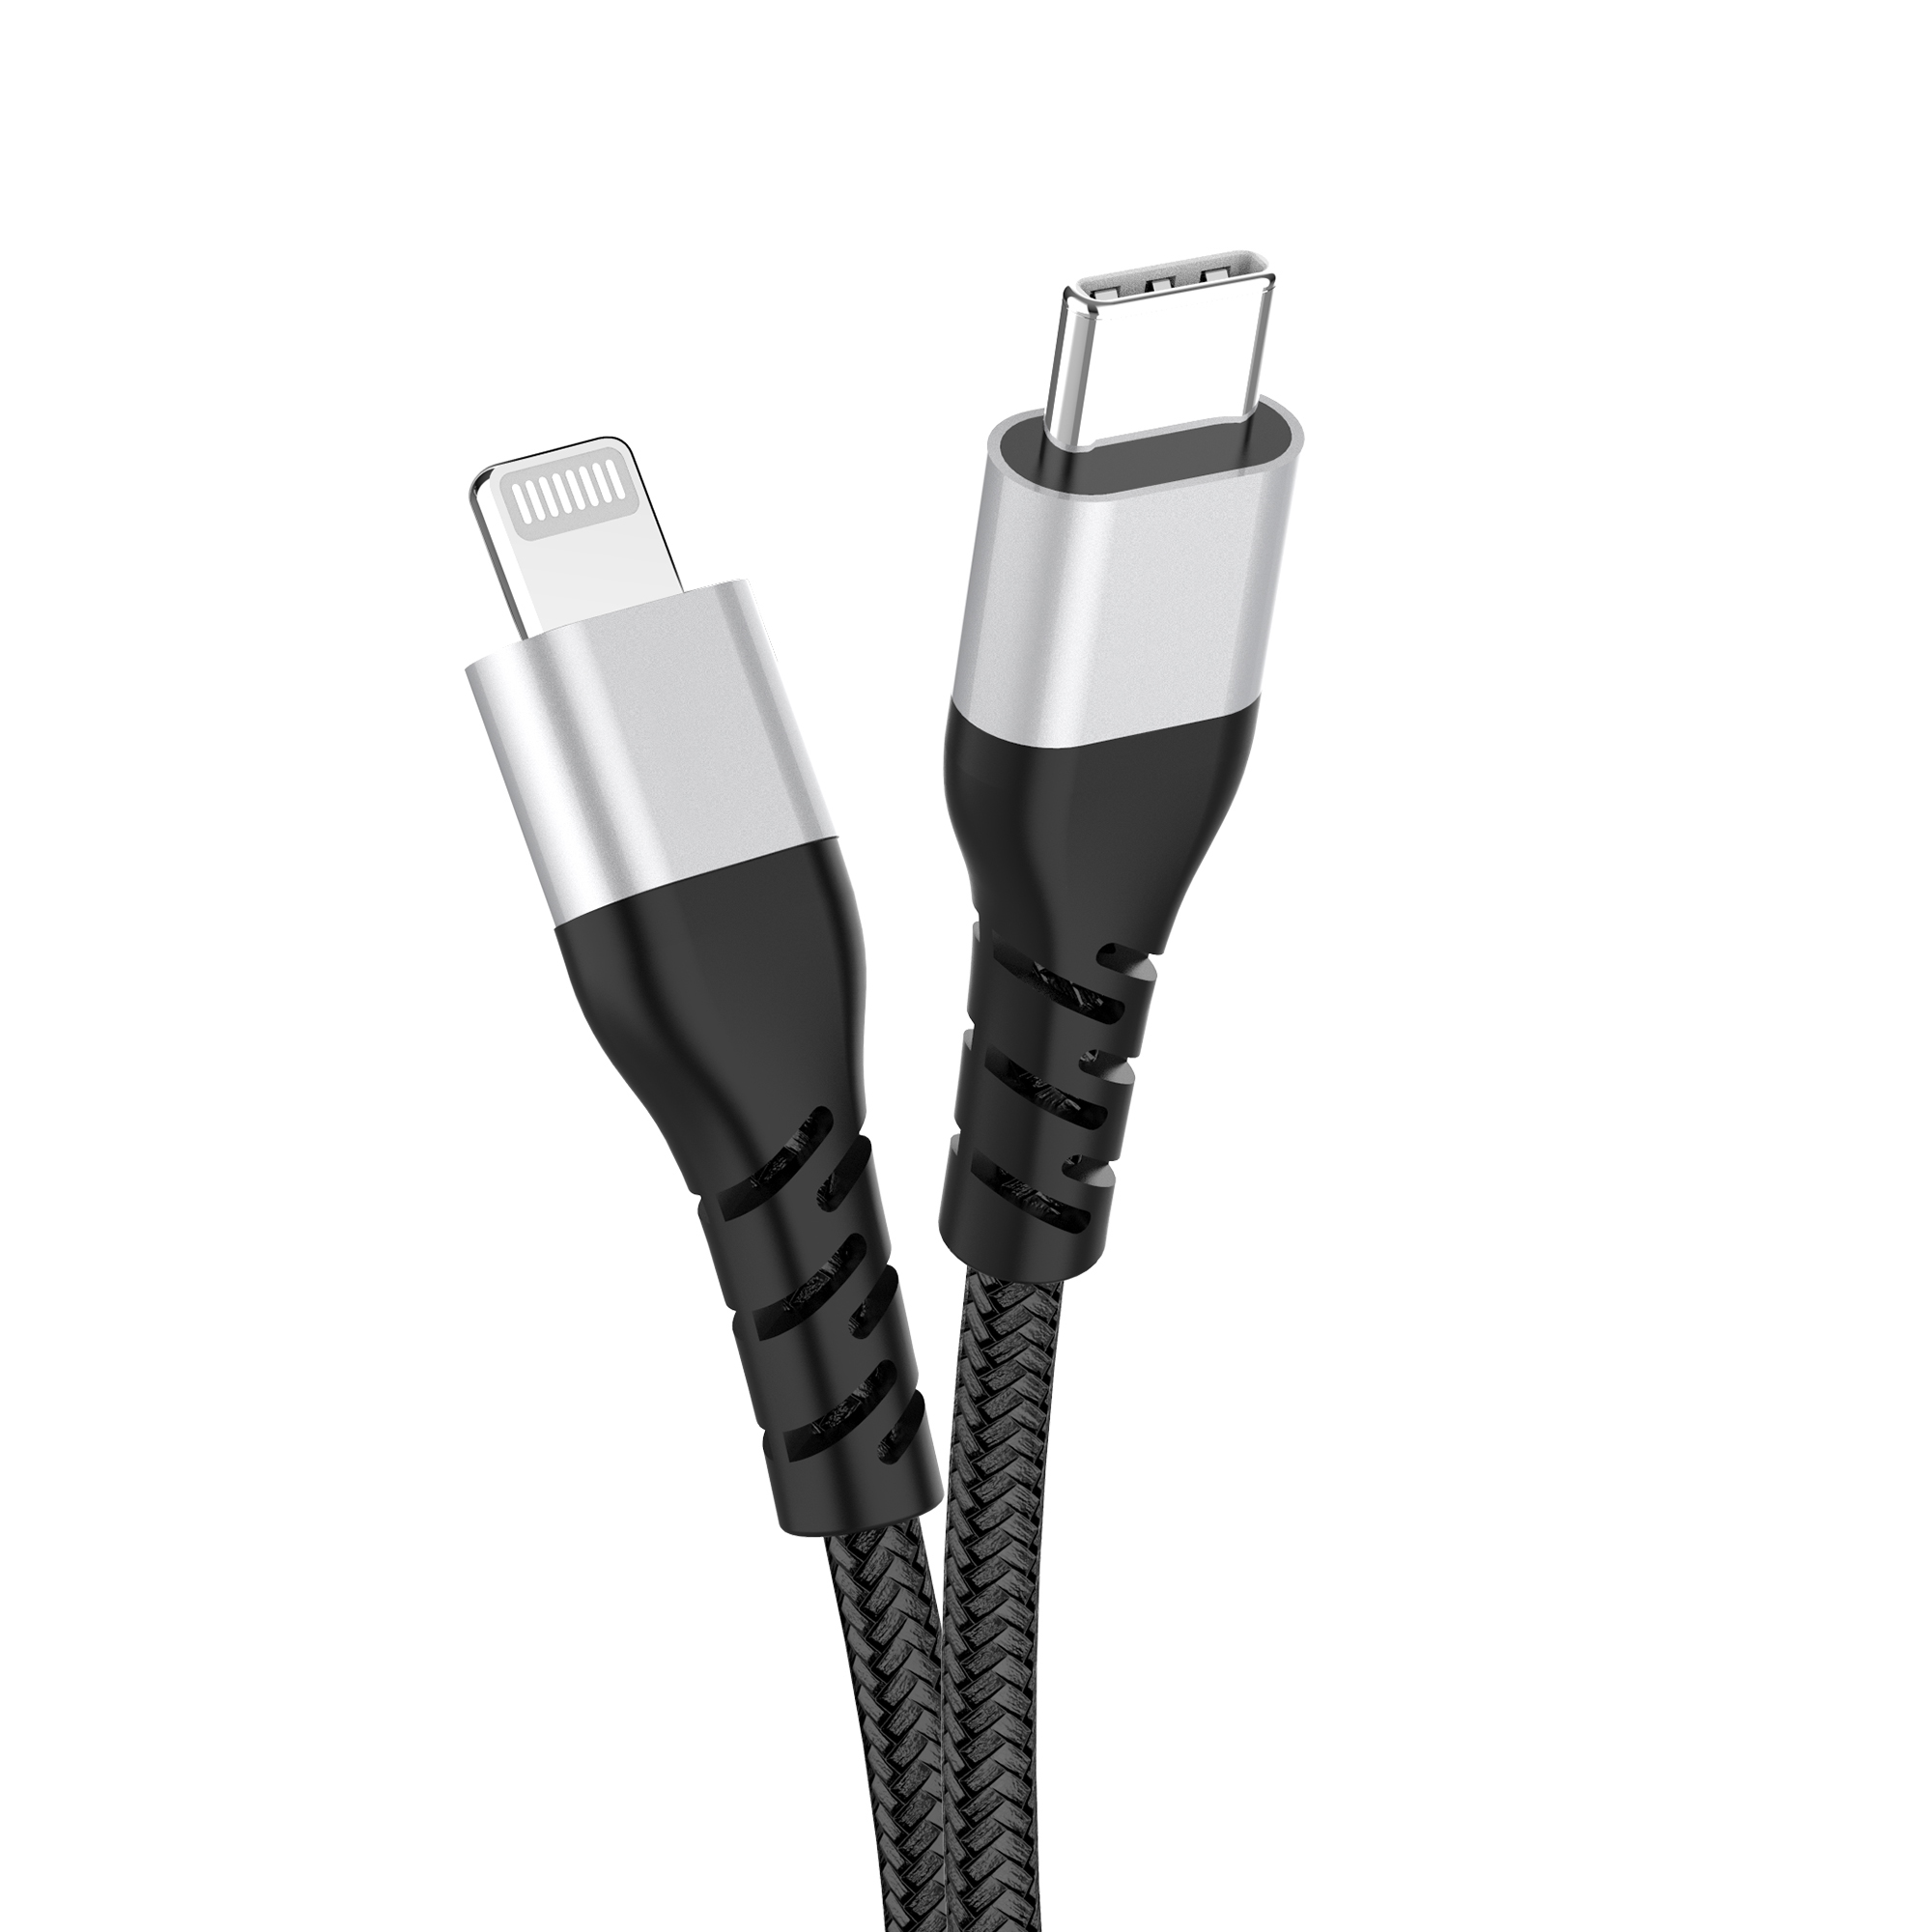 ODM design USB Lightning charging cable